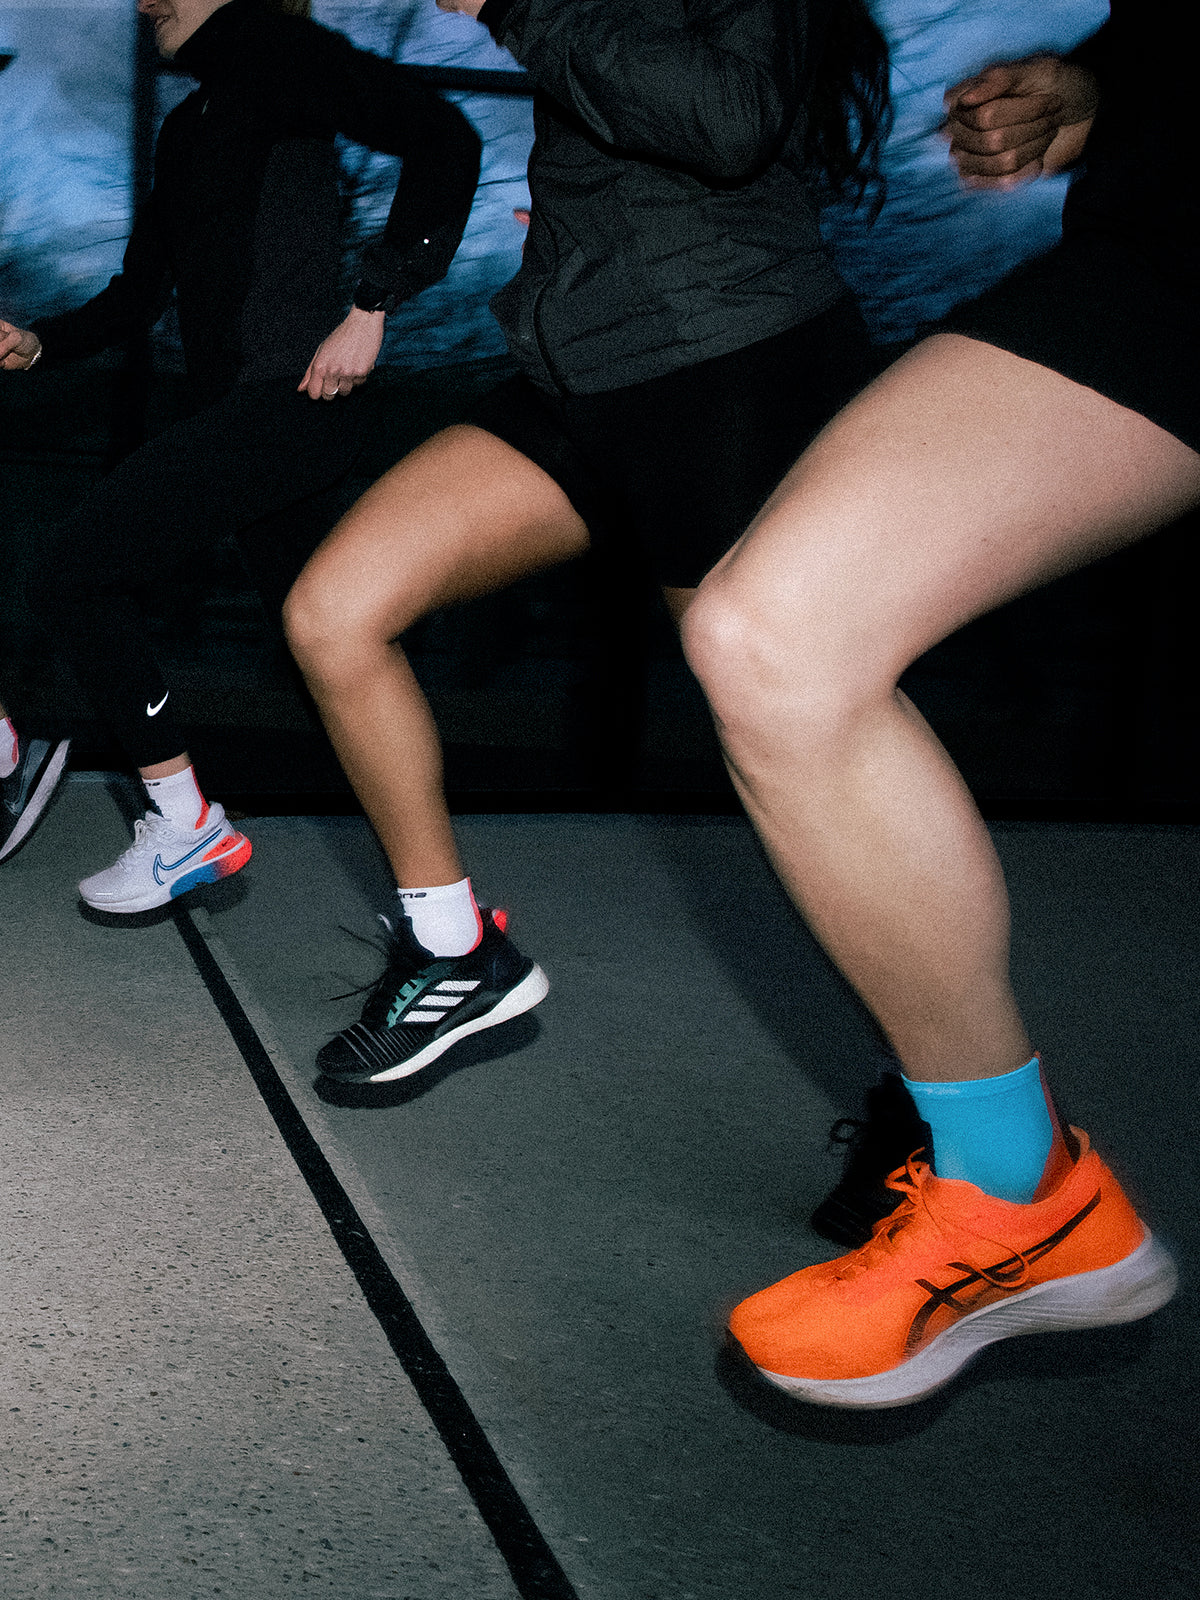 Chaussettes de performance antidérapantes Running - Ranna sport vue mobile